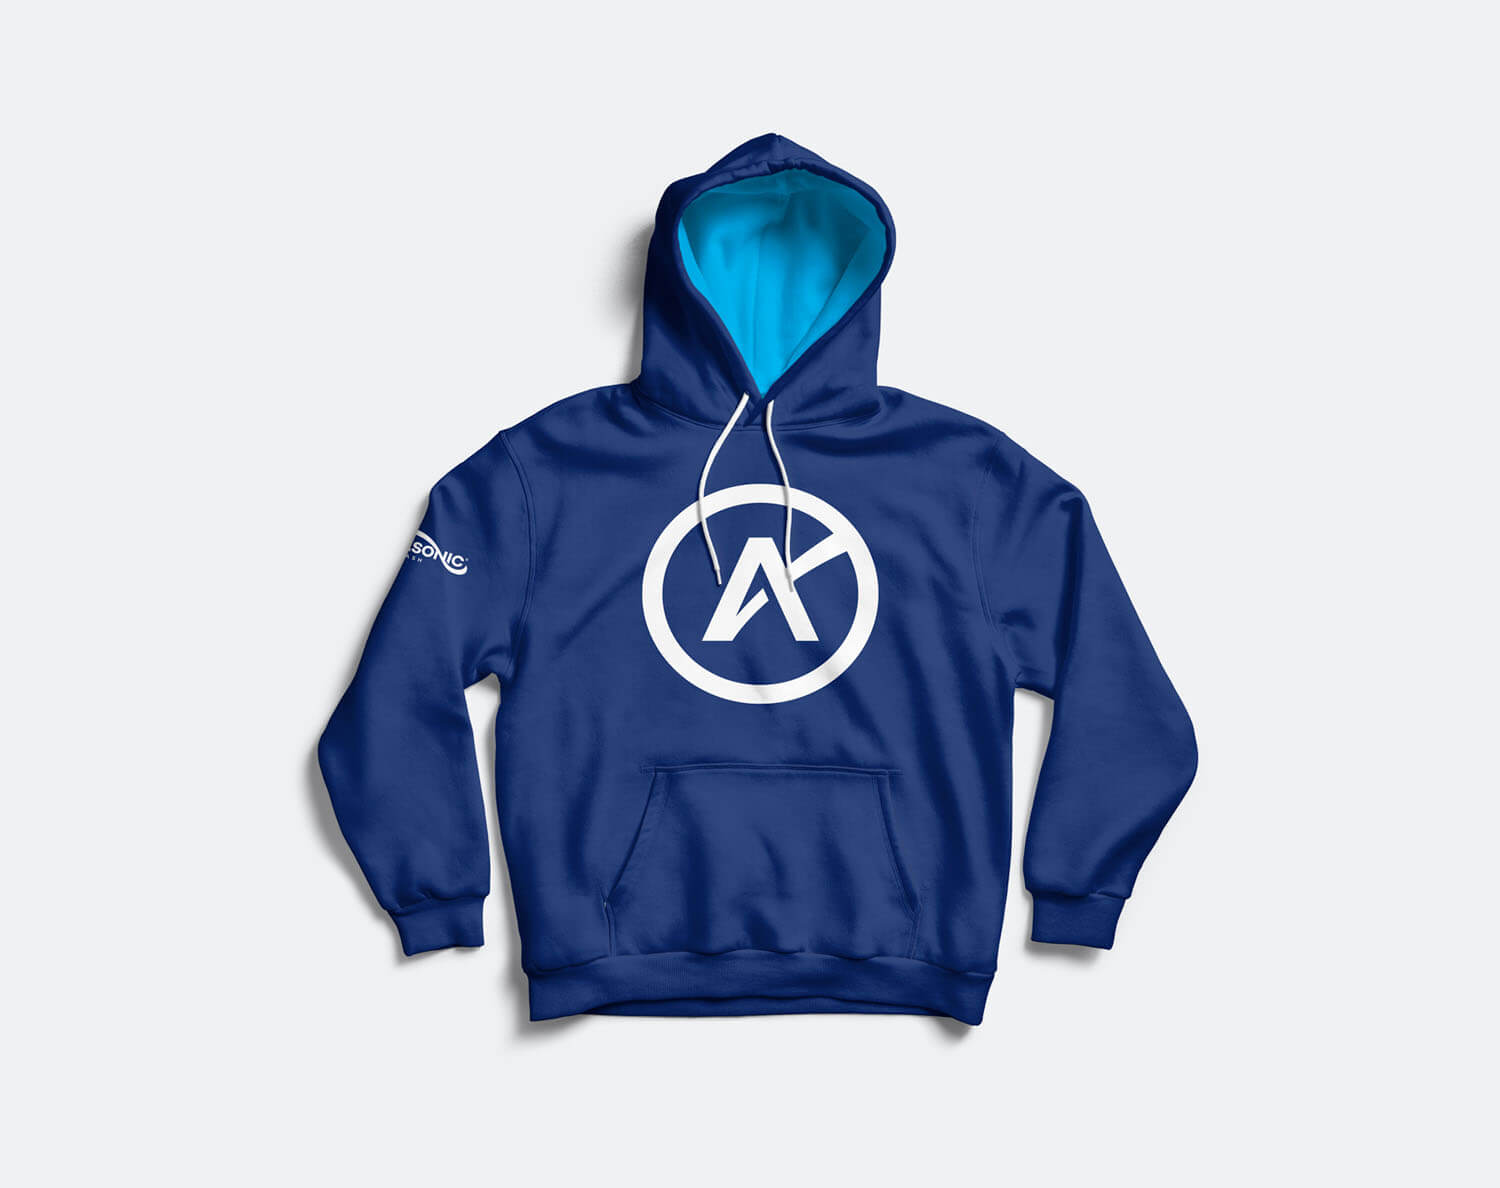 A blue hoodie from the Aquasonic branded merchandise range